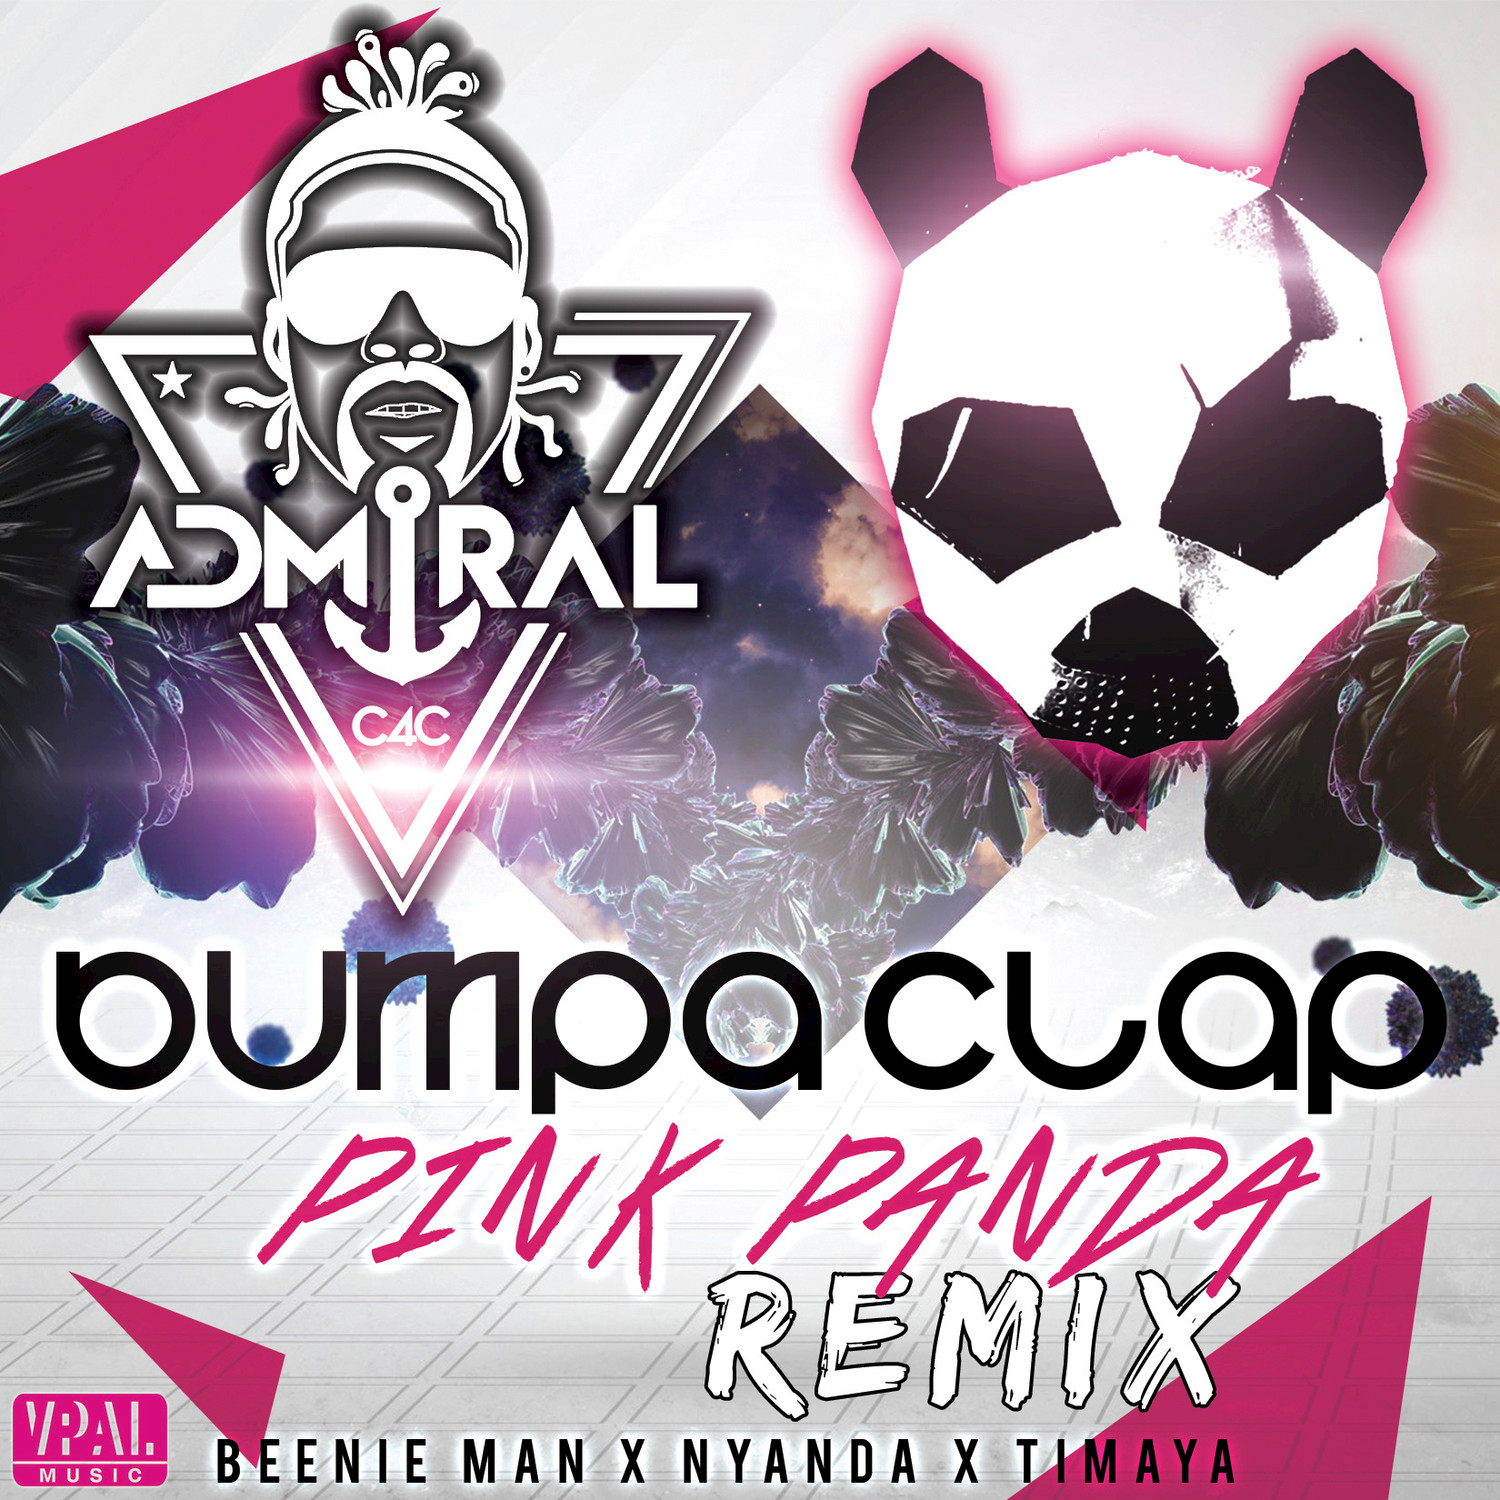 Bumpa Clap (Pink Panda Remix)